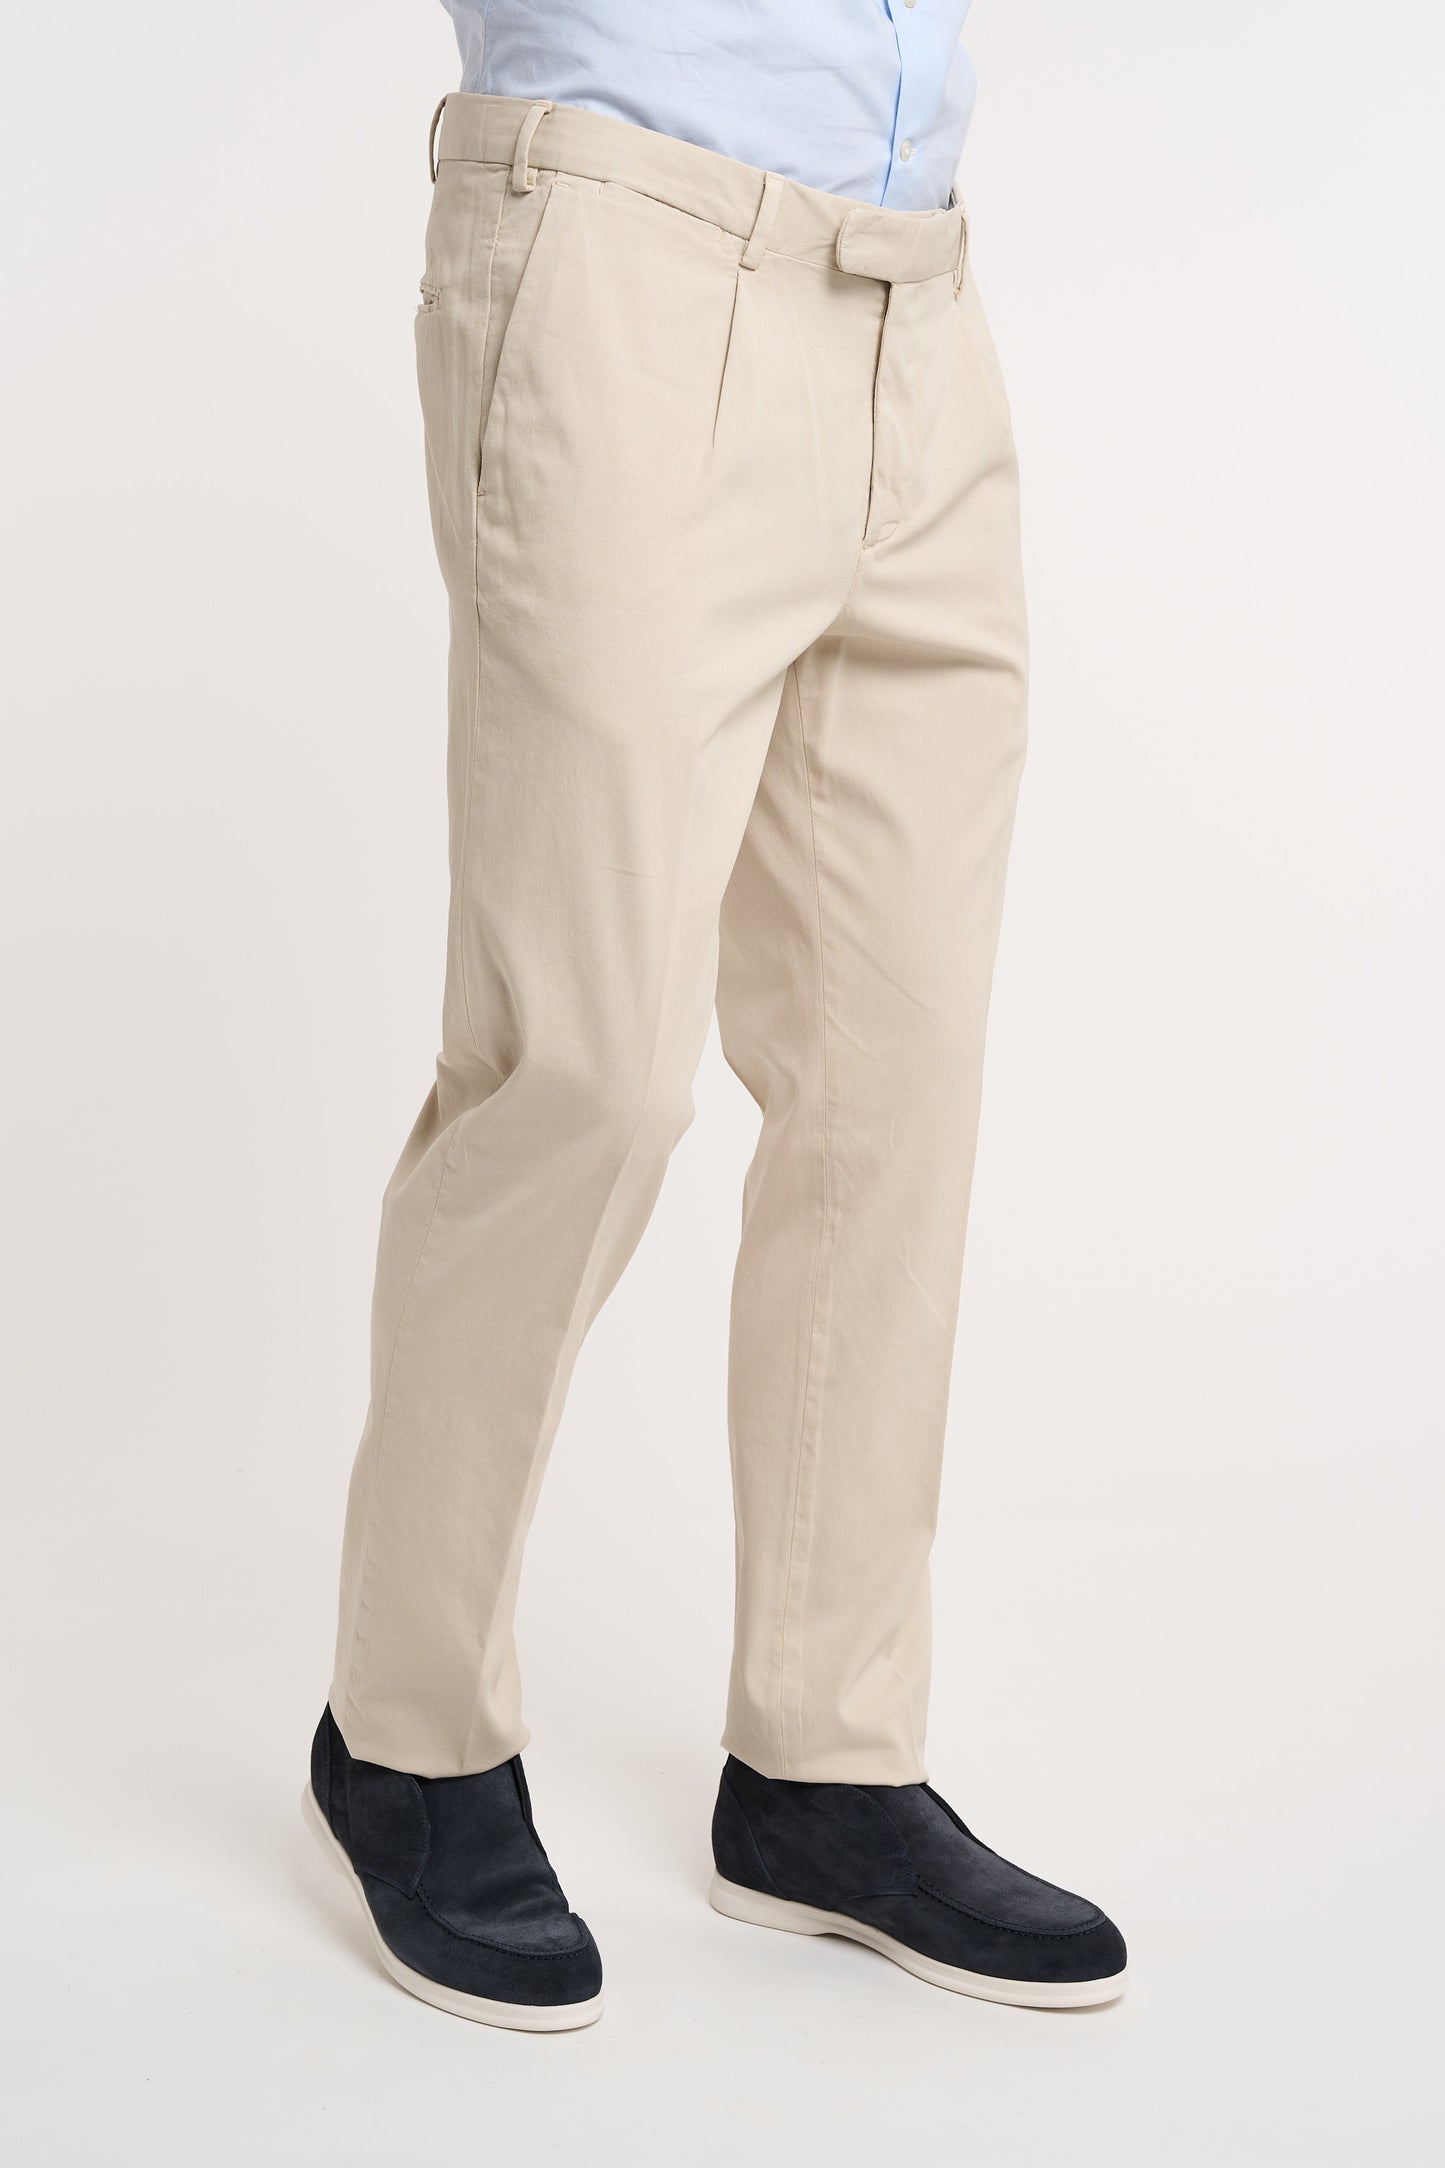  Devore Pantalone Pence In Cotone/seta/elastan Grigio Beige Uomo - 3